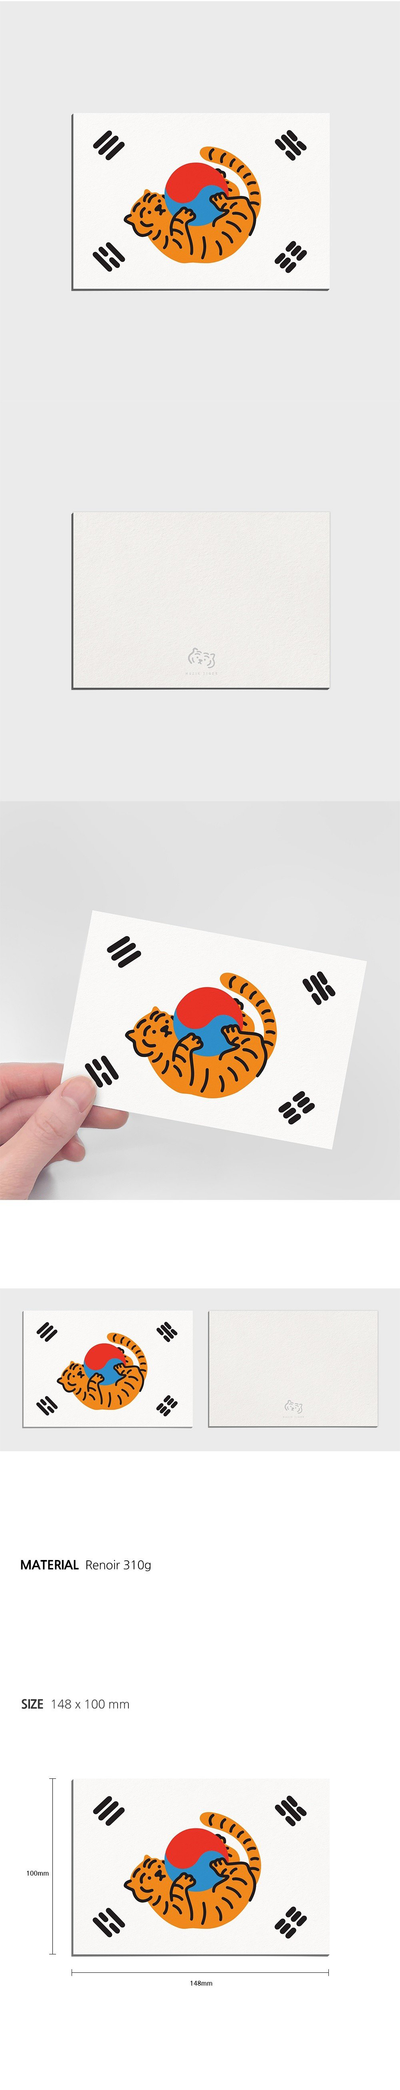 taegeuk tiger postcard